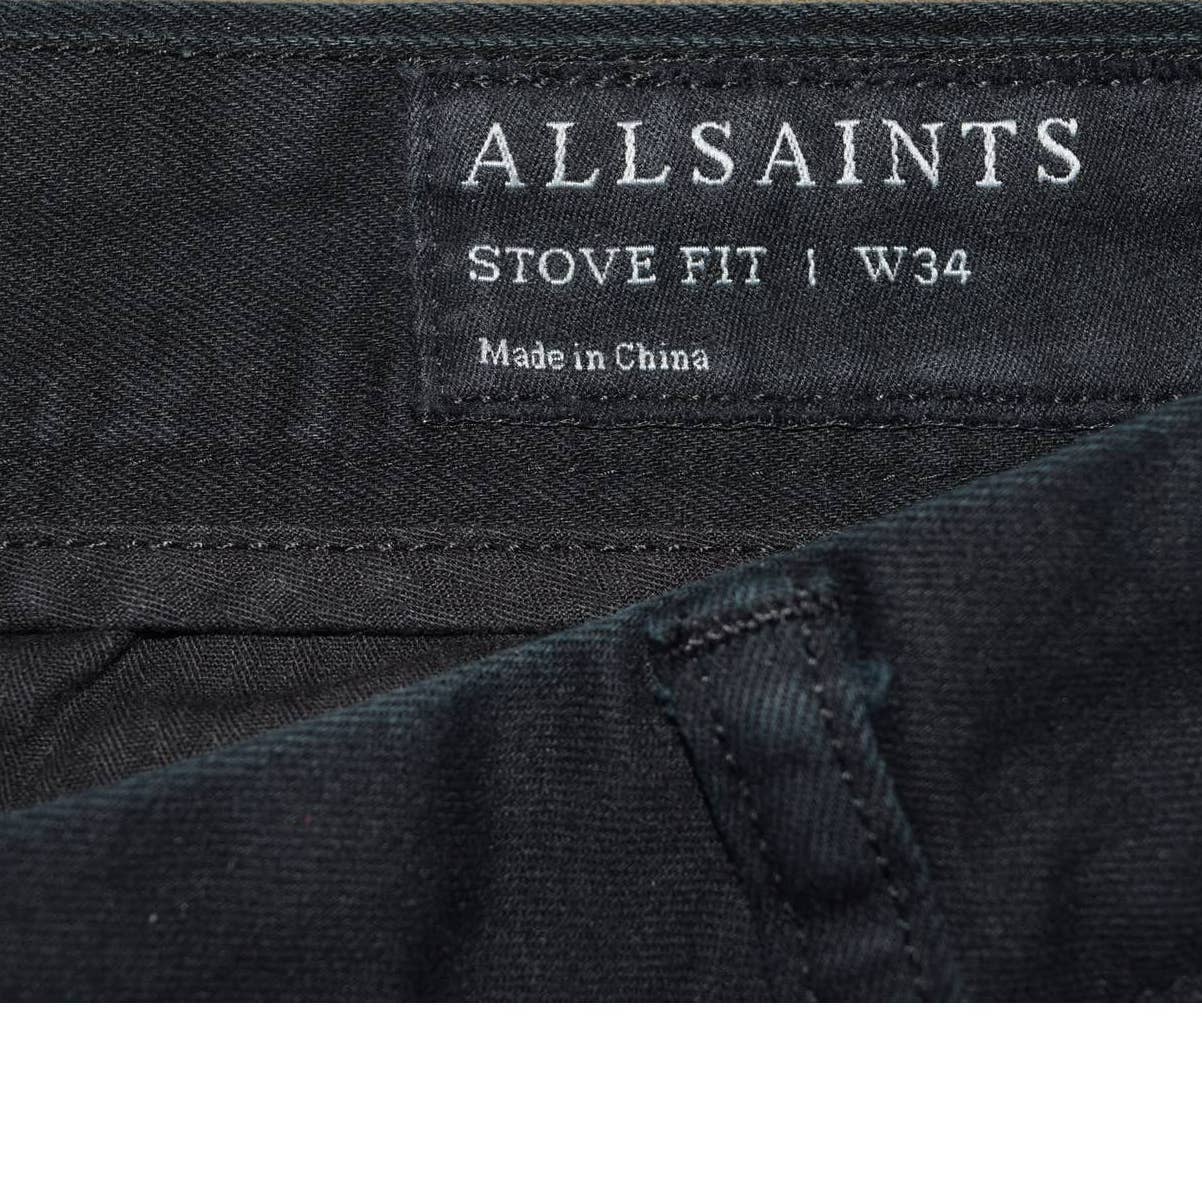 All Saints Black Stove Fit Button Fly Pants - 34